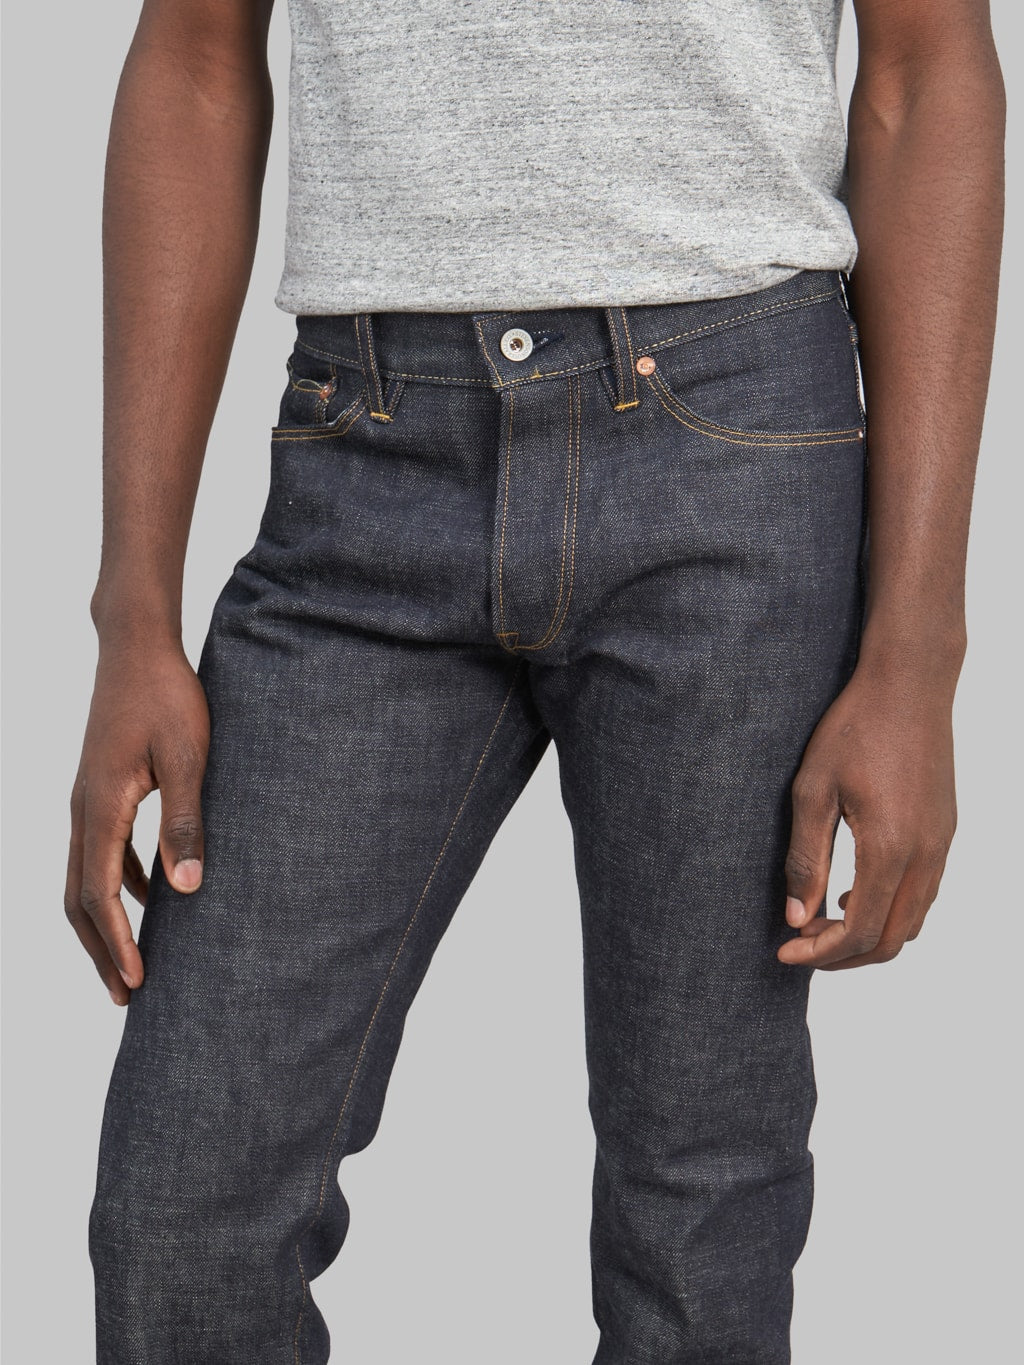 Stevenson Overall Big Sur 210 slim tapered jeans inseam